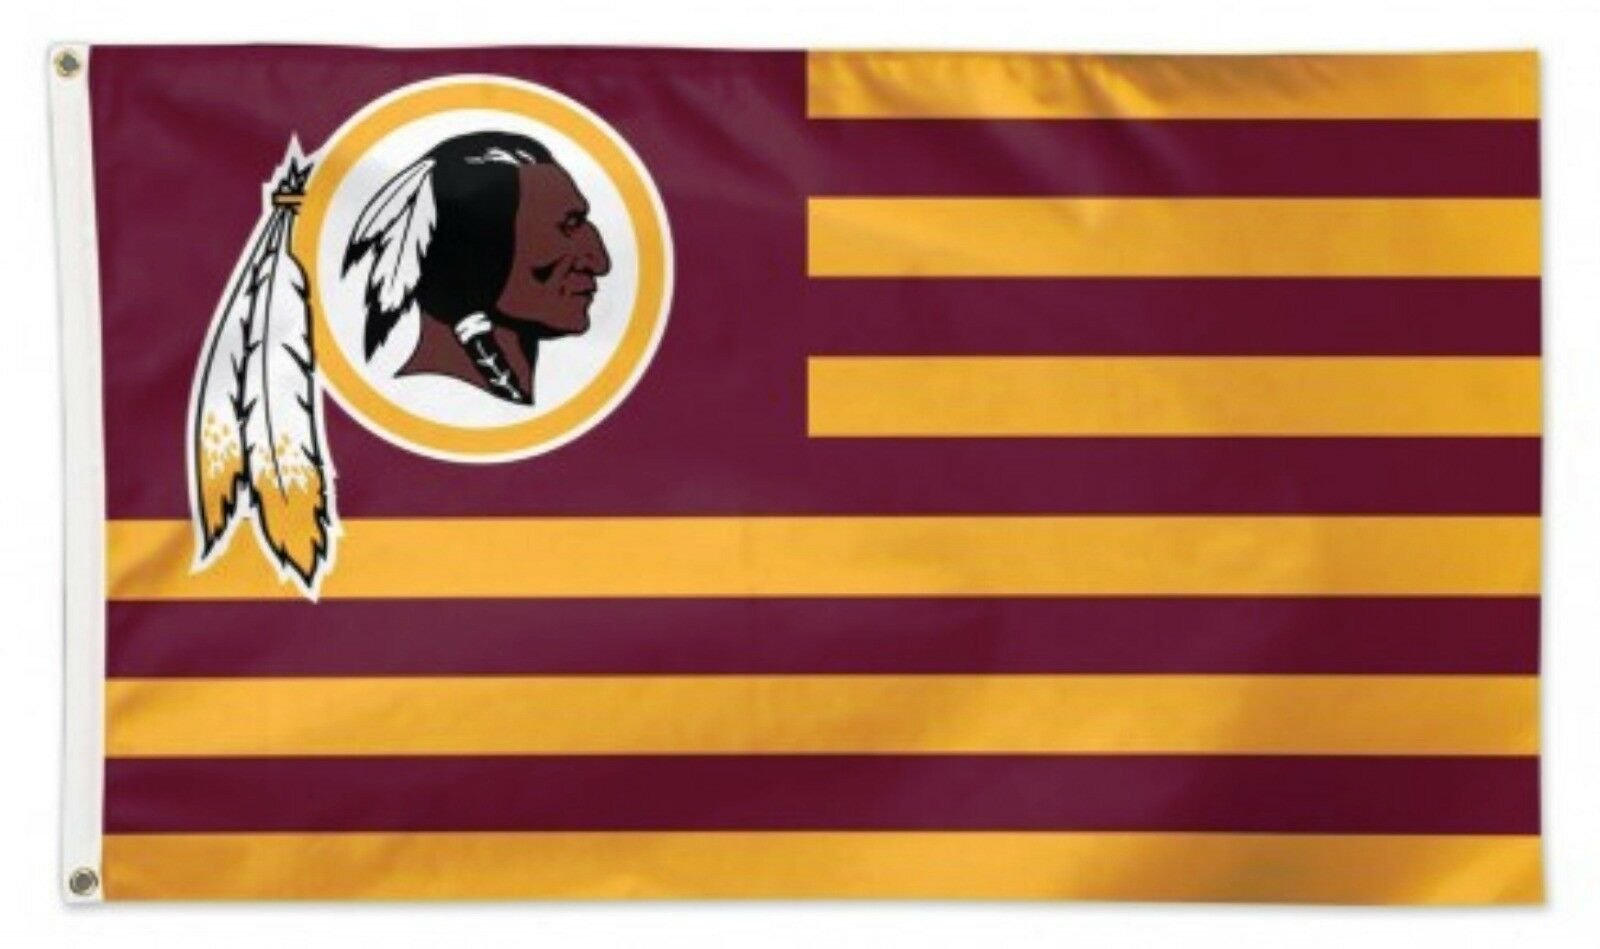 Washington Redskins Commanders Premium 3x5 Feet Flag Banner, Stripes Design, Metal Grommets, Outdoor Use, Single Sided